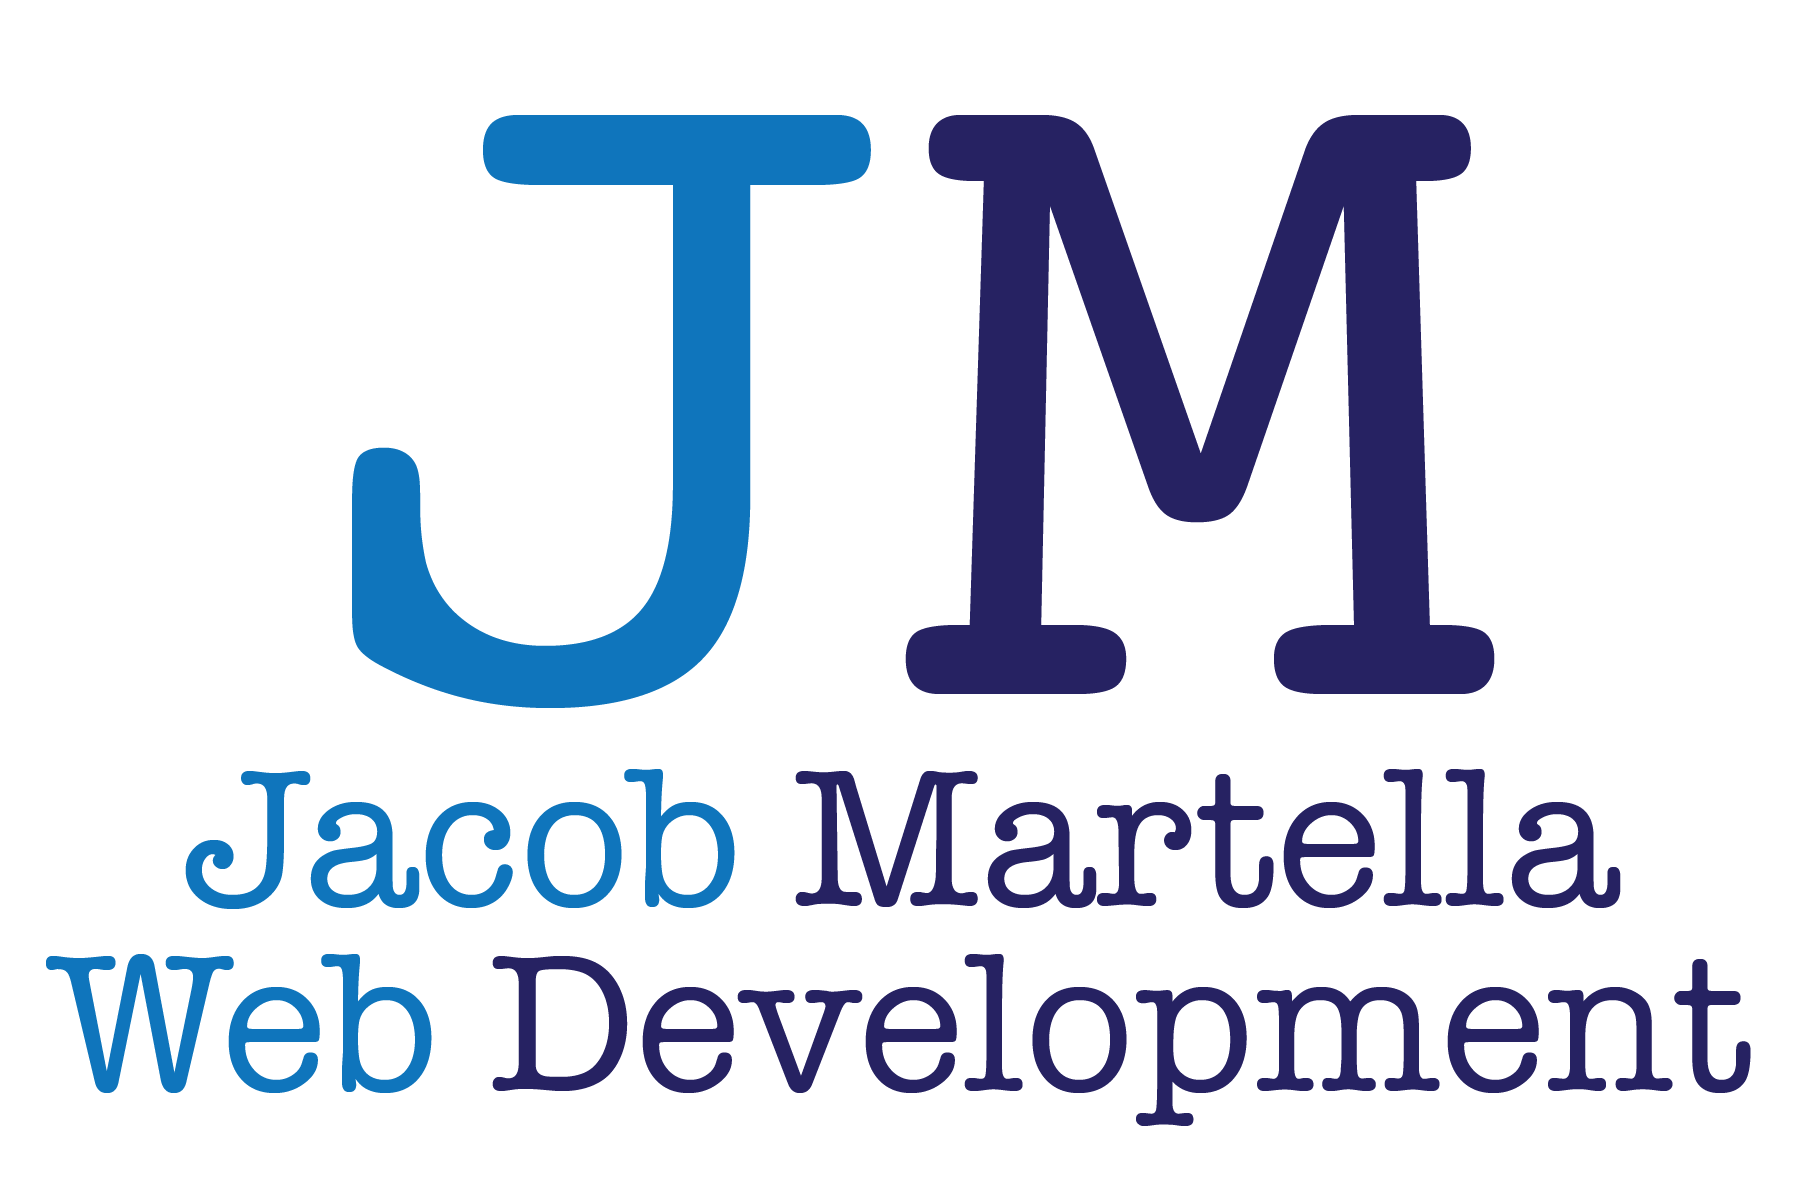 Jacob Martella Web Development logo with blue bottom text